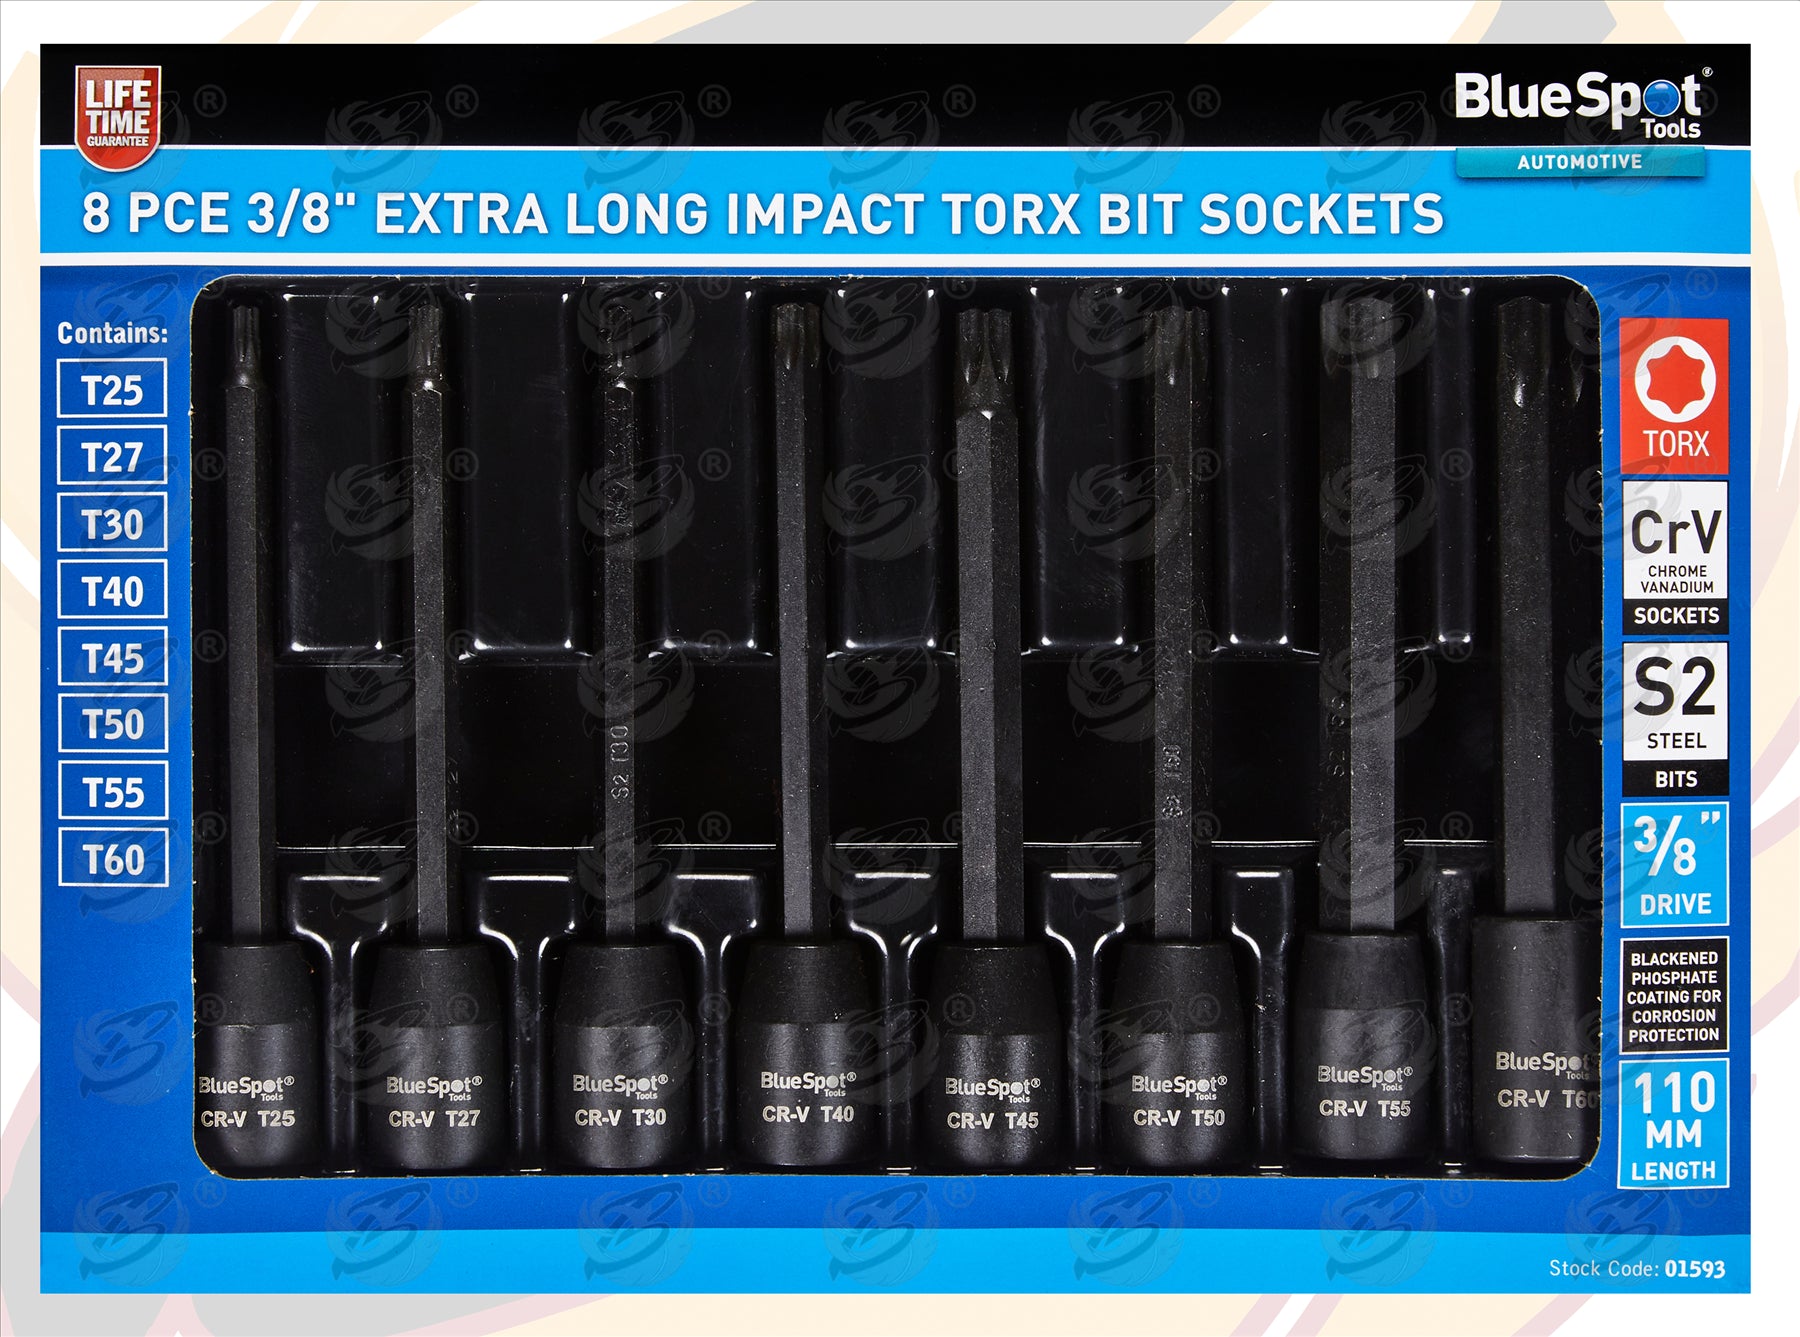 BLUESPOT 8PCS 3/8" DRIVE EXTRA LONG IMPACT TORX BIT SOCKETS T25 - T60